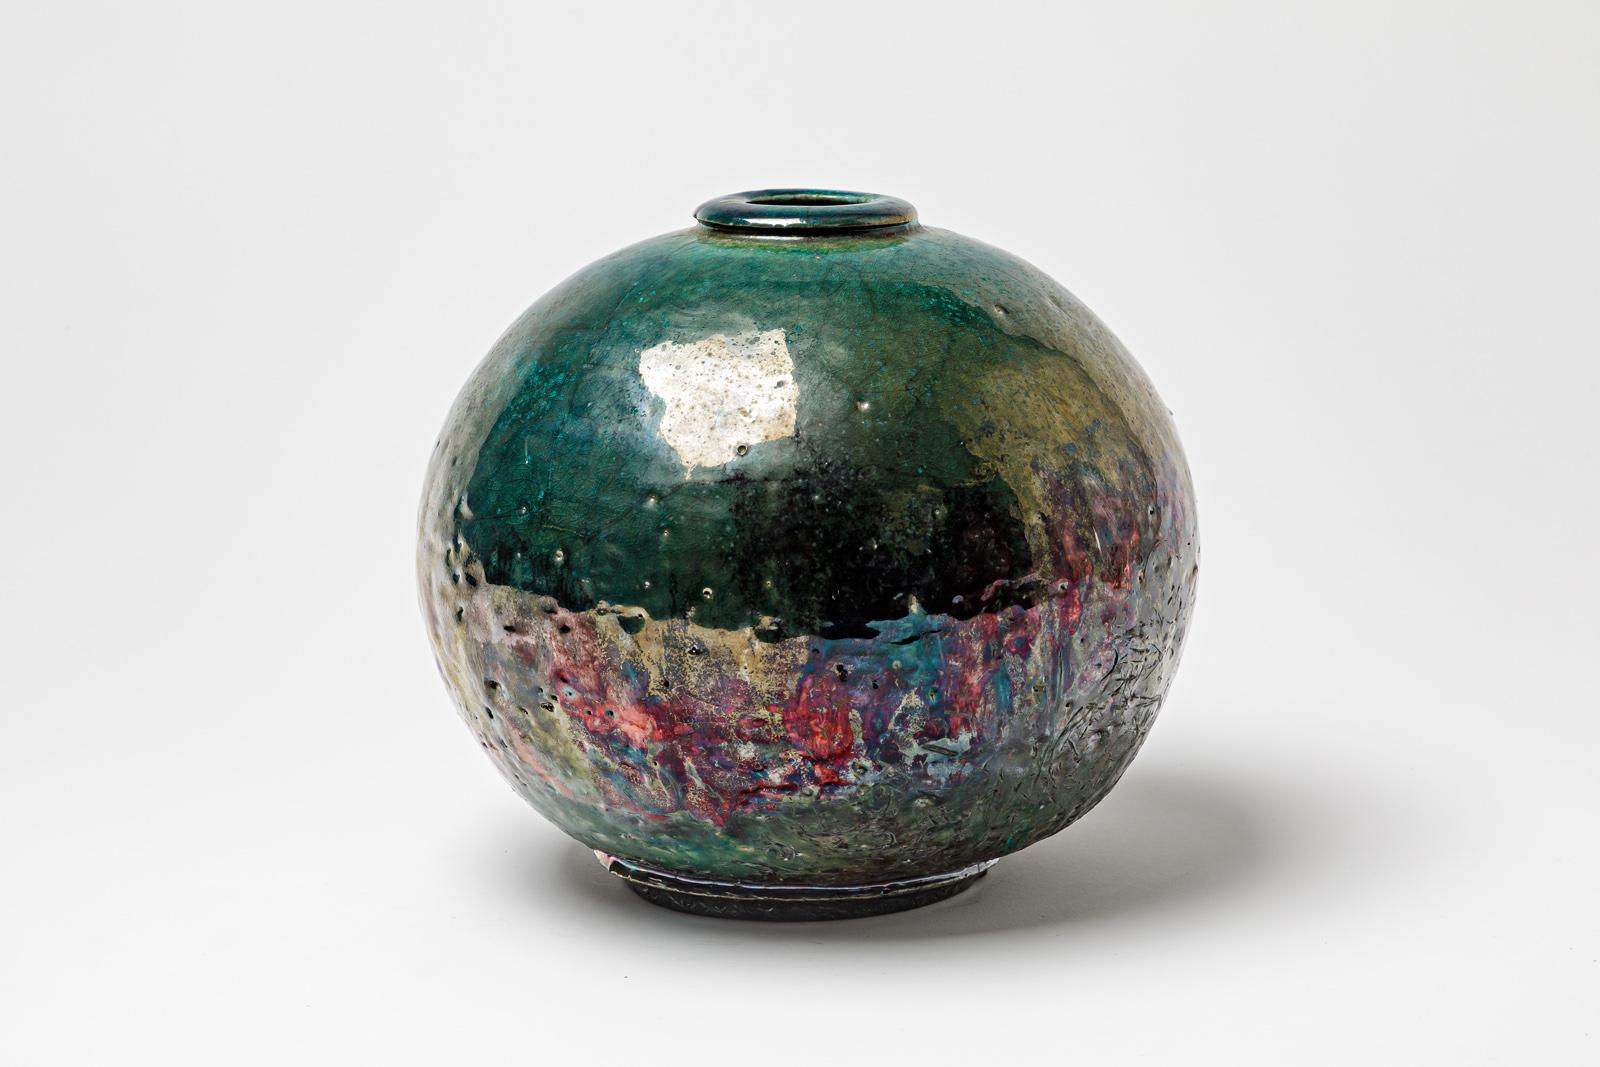 Green glazed ceramic vase with metallic highlights by Gisèle Buthod Garçon. Raku fired. Artist monogram and signature under the base. Circa 1980-1990. 
H : 7.9’ x 7.9’ inches.